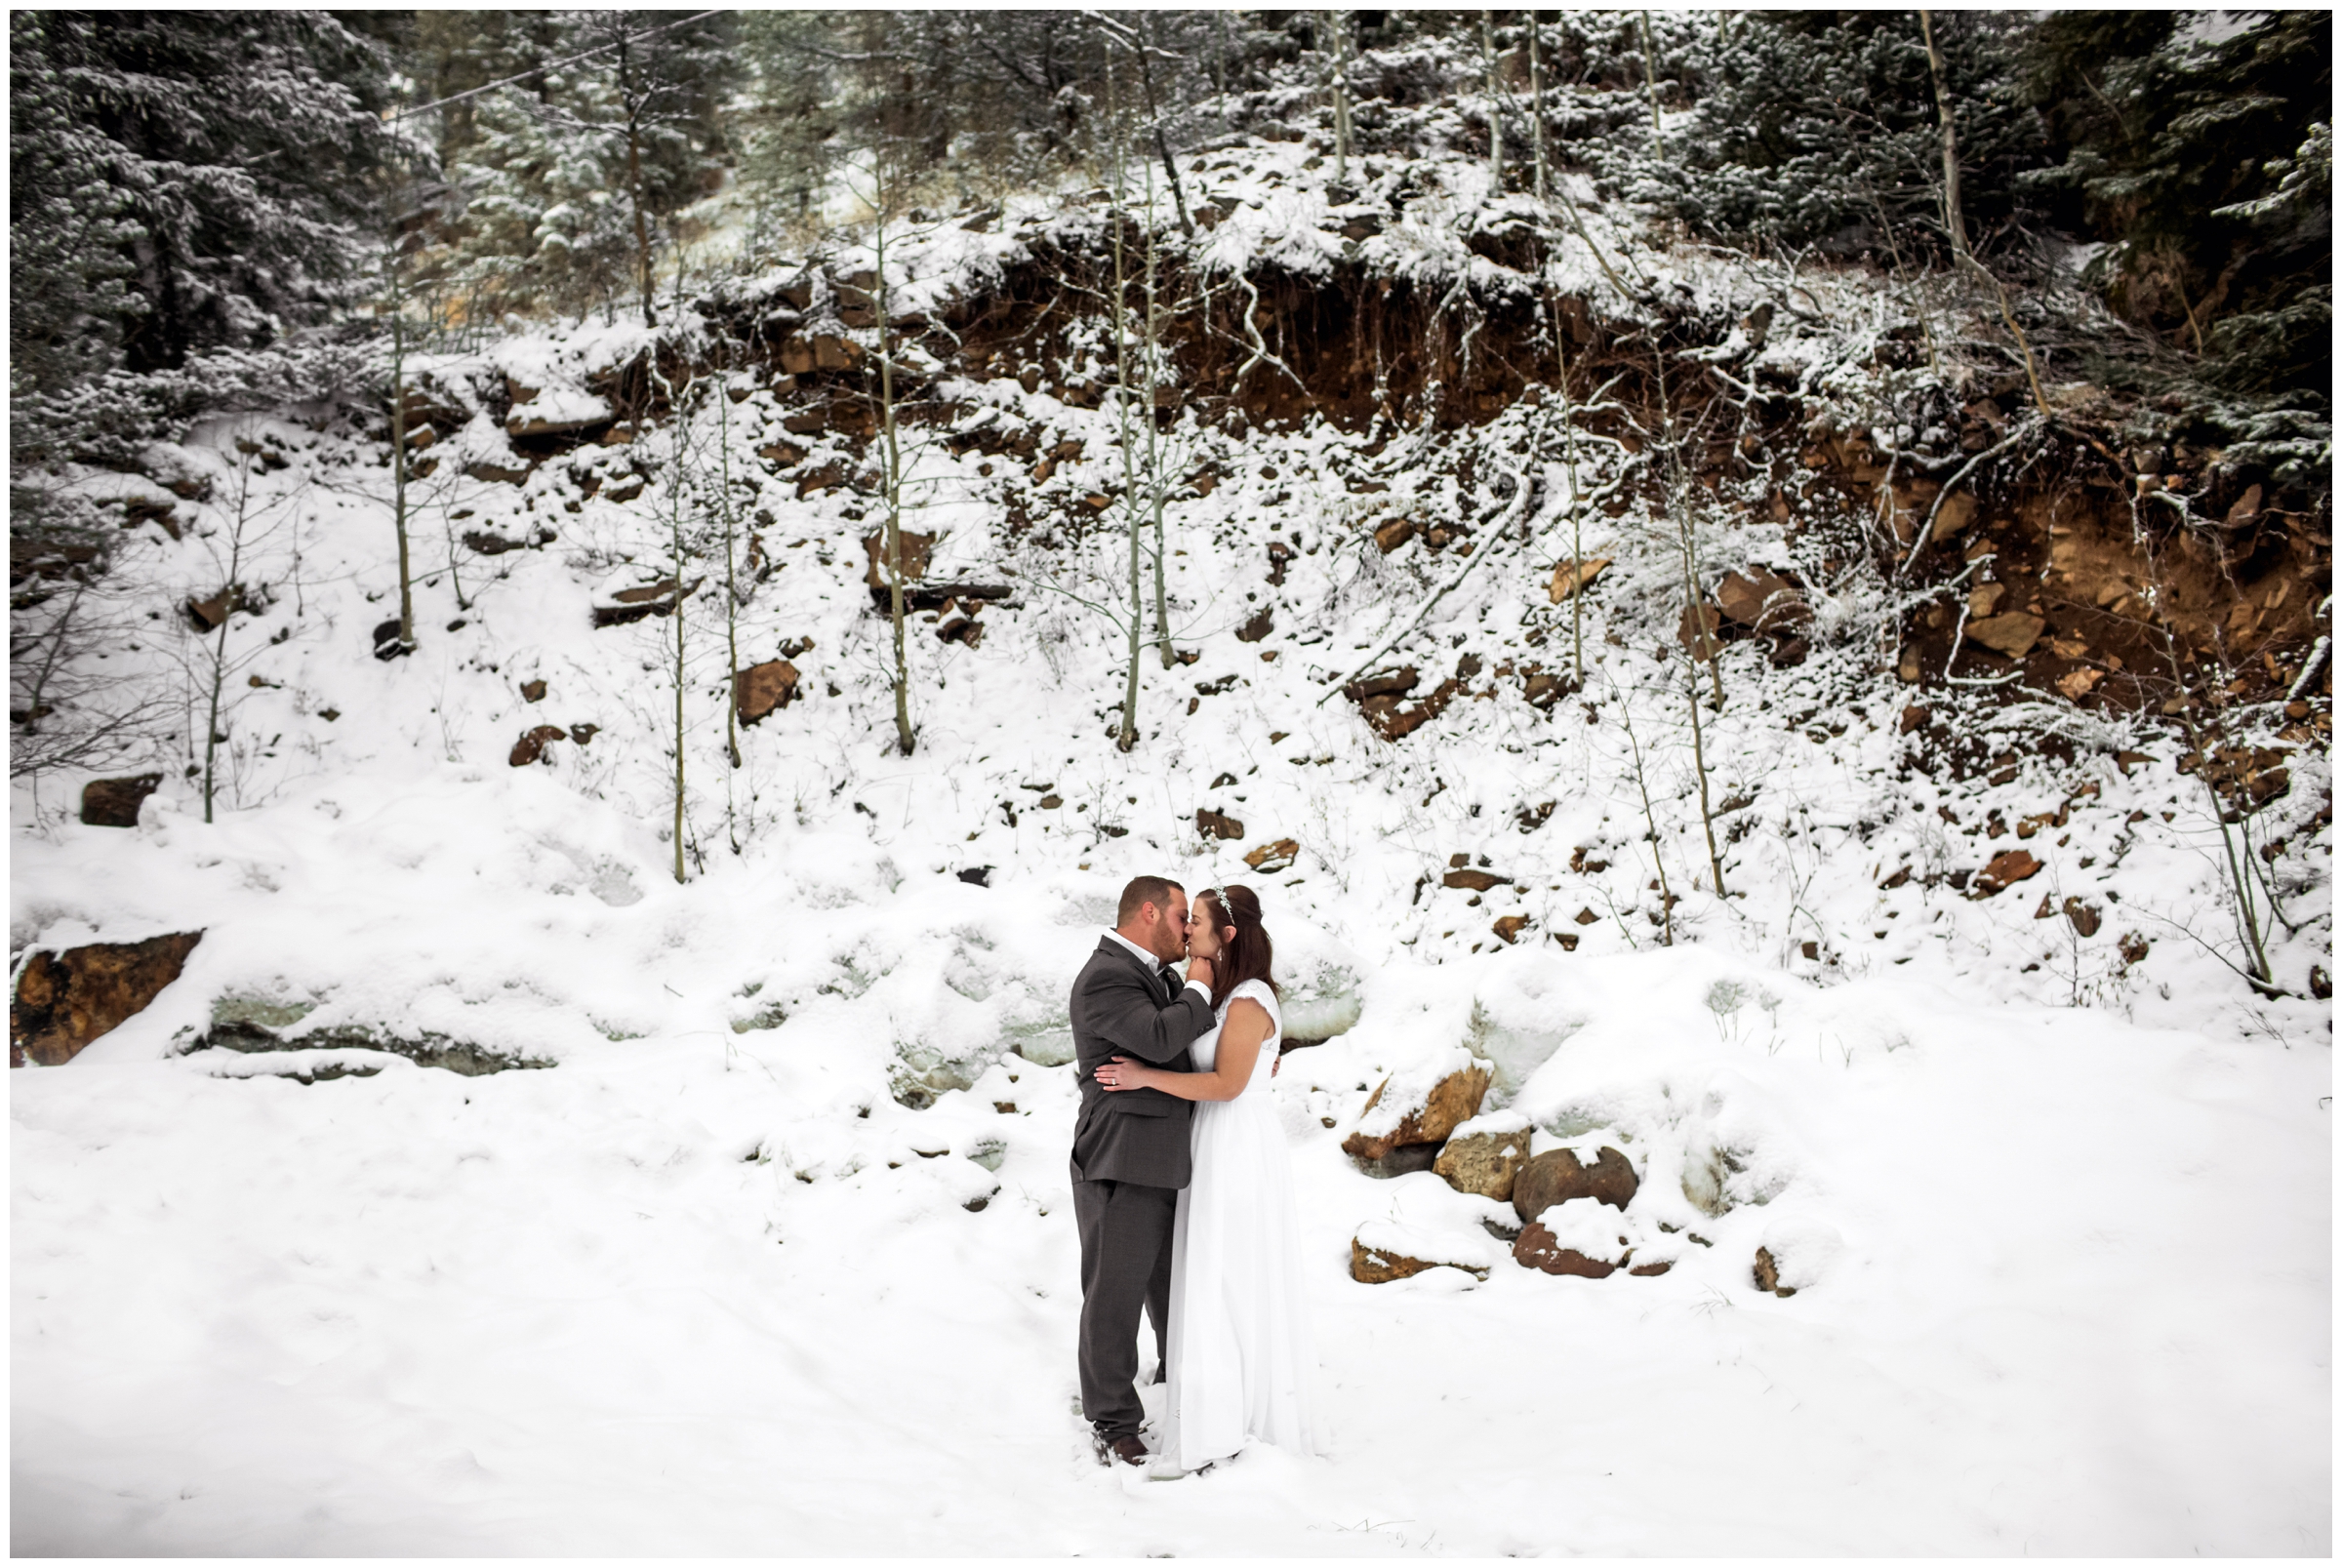 snowy winter wedding photography inspiration in Colorado mountains